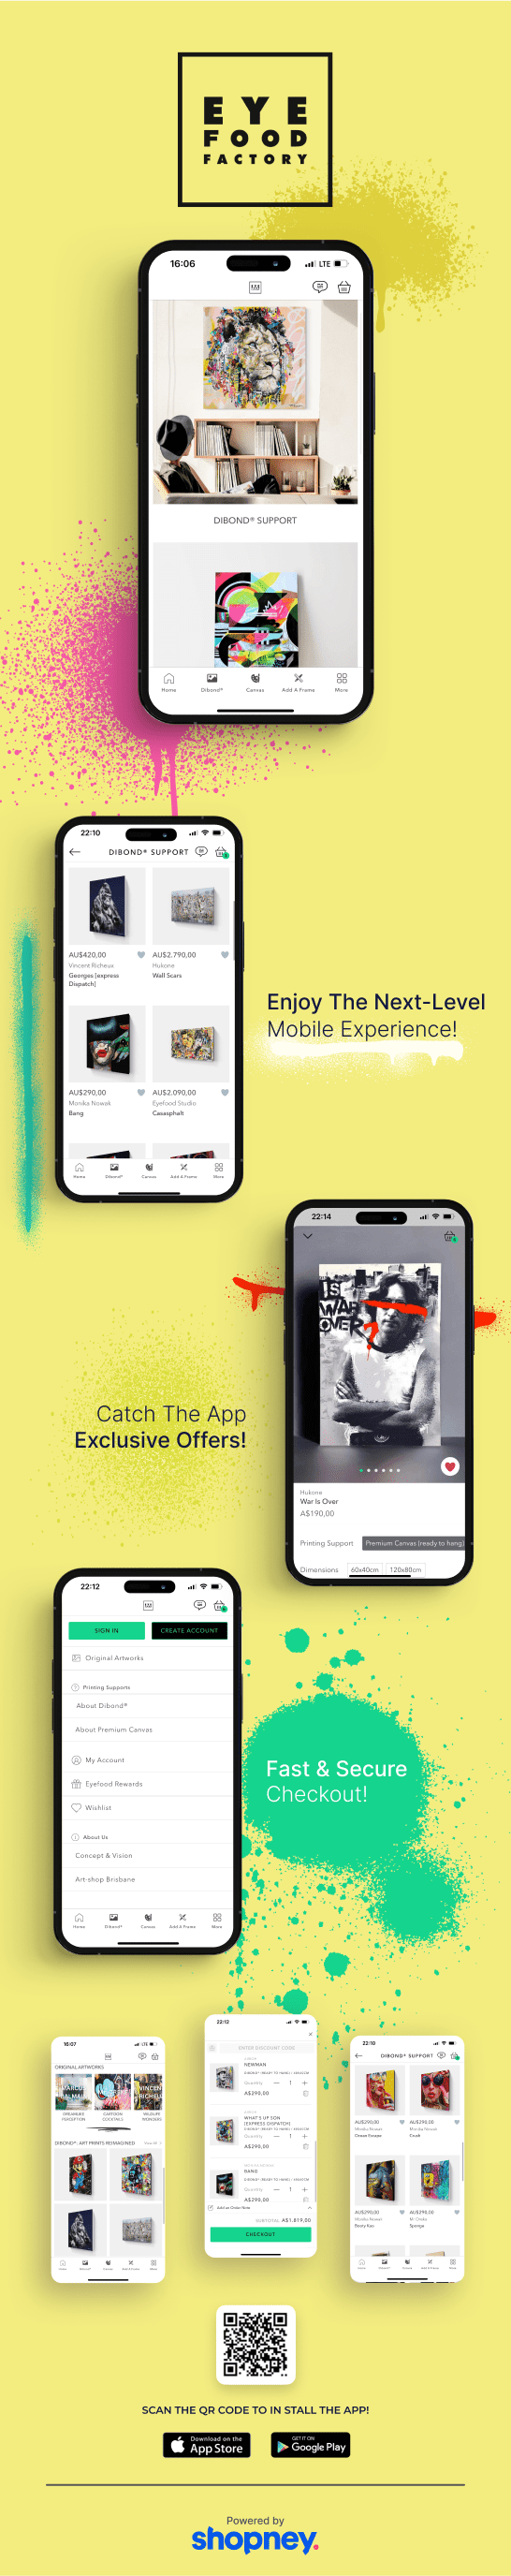 the mobile app design of Eyefood Factory app